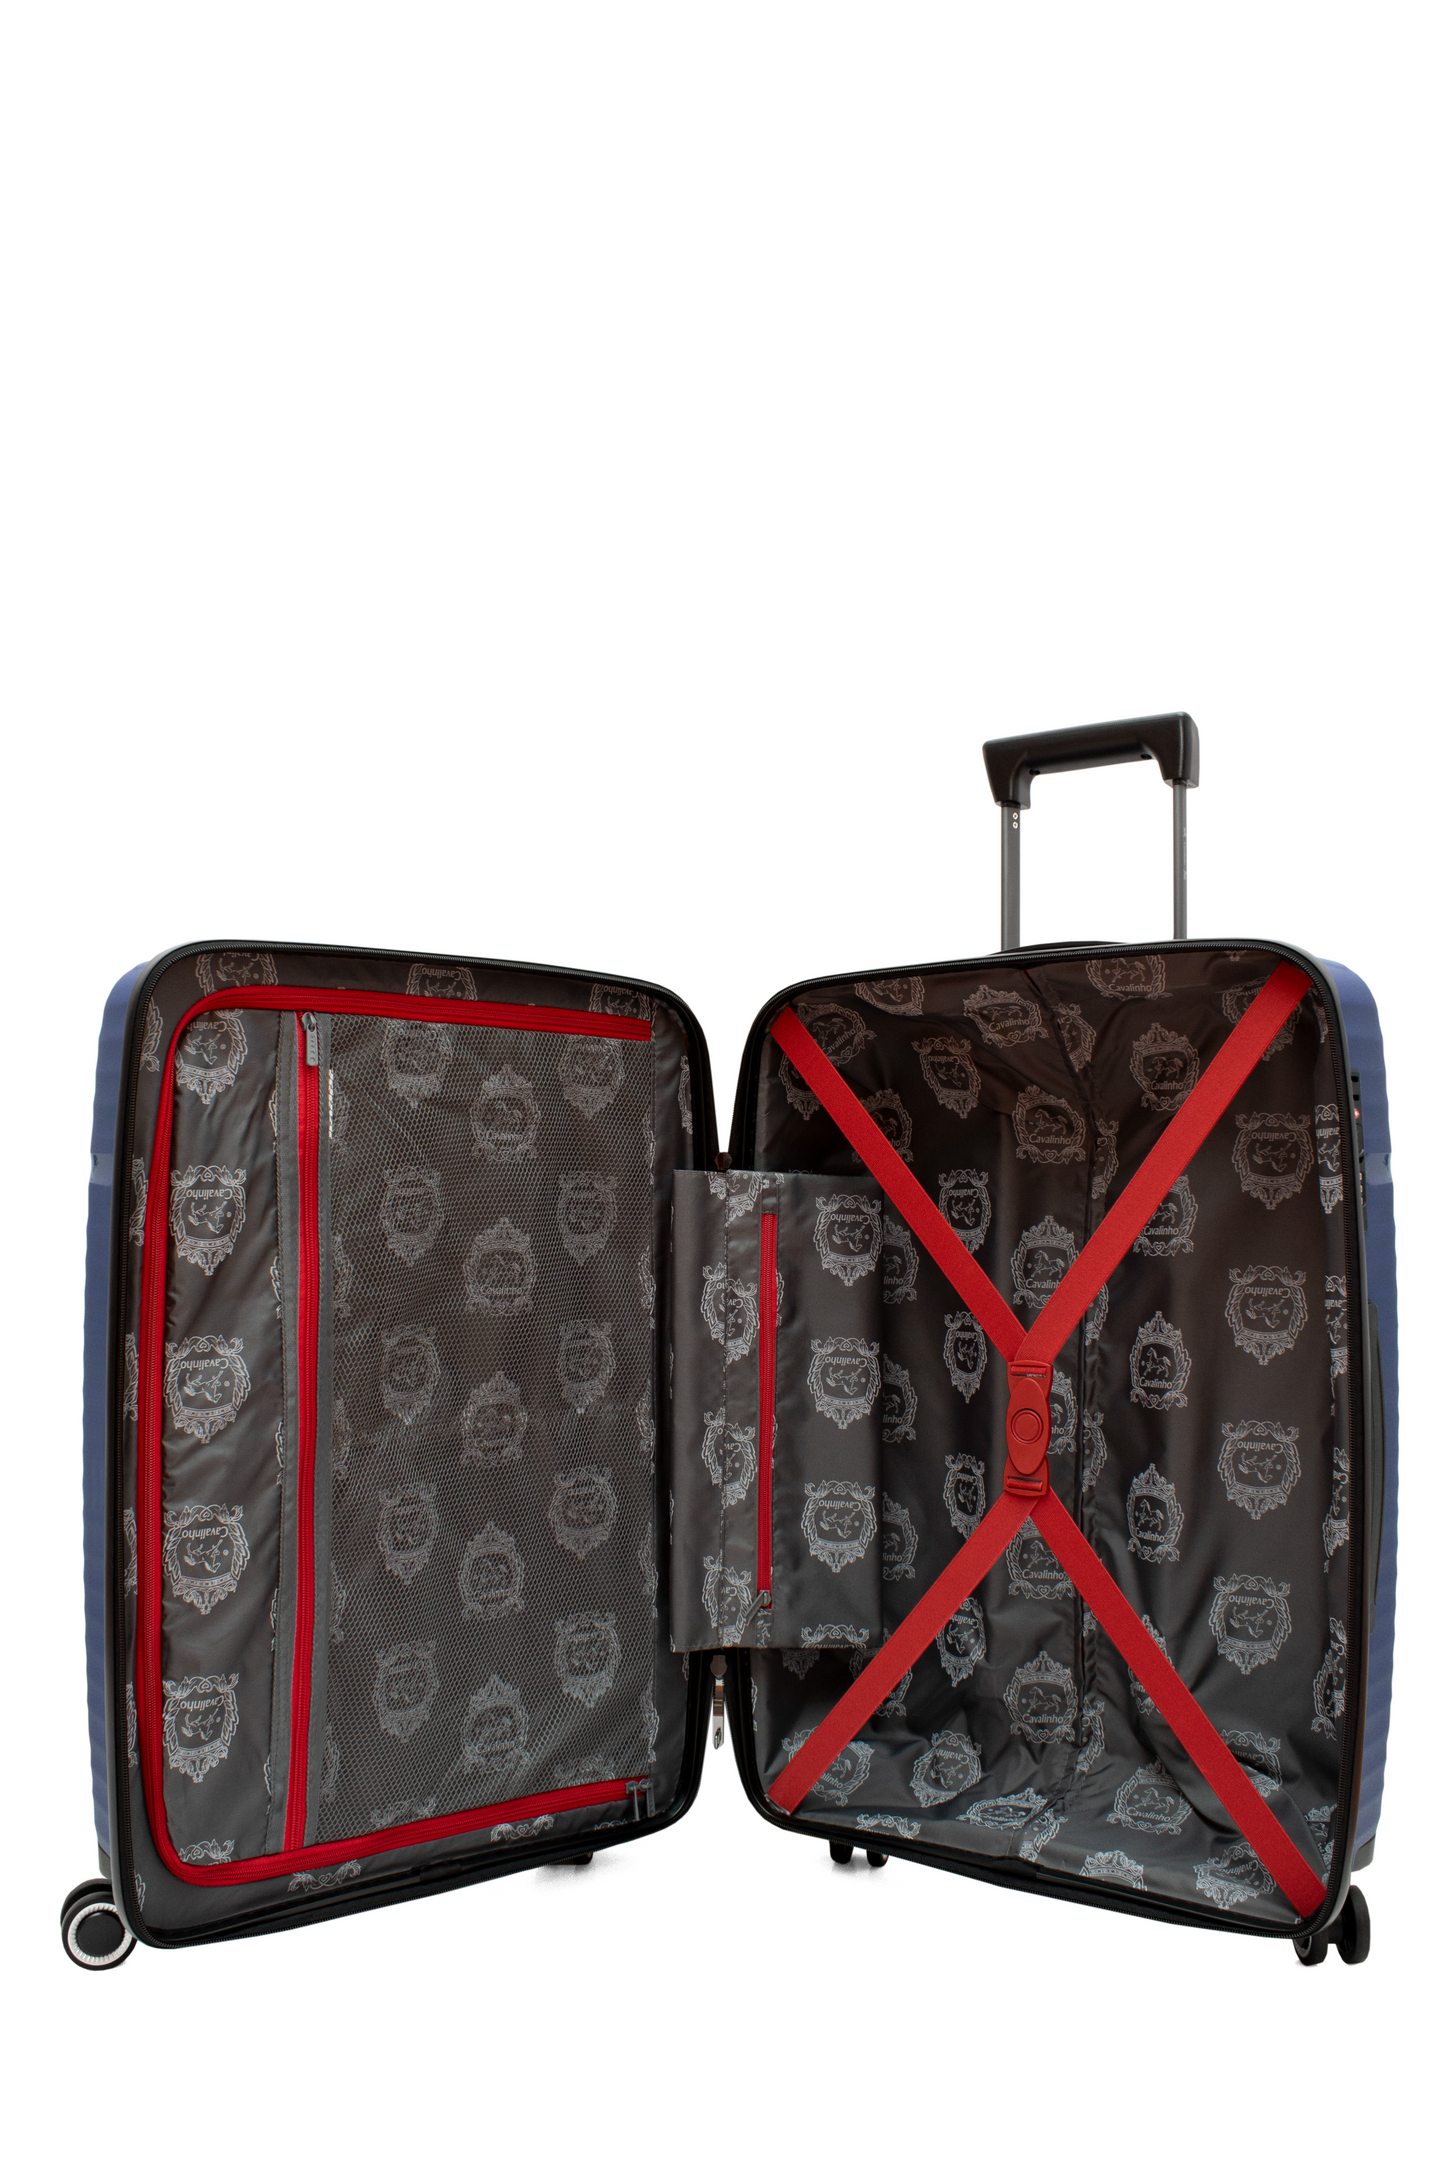 Cavalinho 3 Piece Hardside Luggage Set (14", 24" & 28") - 14 inch, 24 inch & 28 inch Set SteelBlue - 68010003.03.24_4S_14c51310-34bb-461e-9a6f-69a7c0e3464a